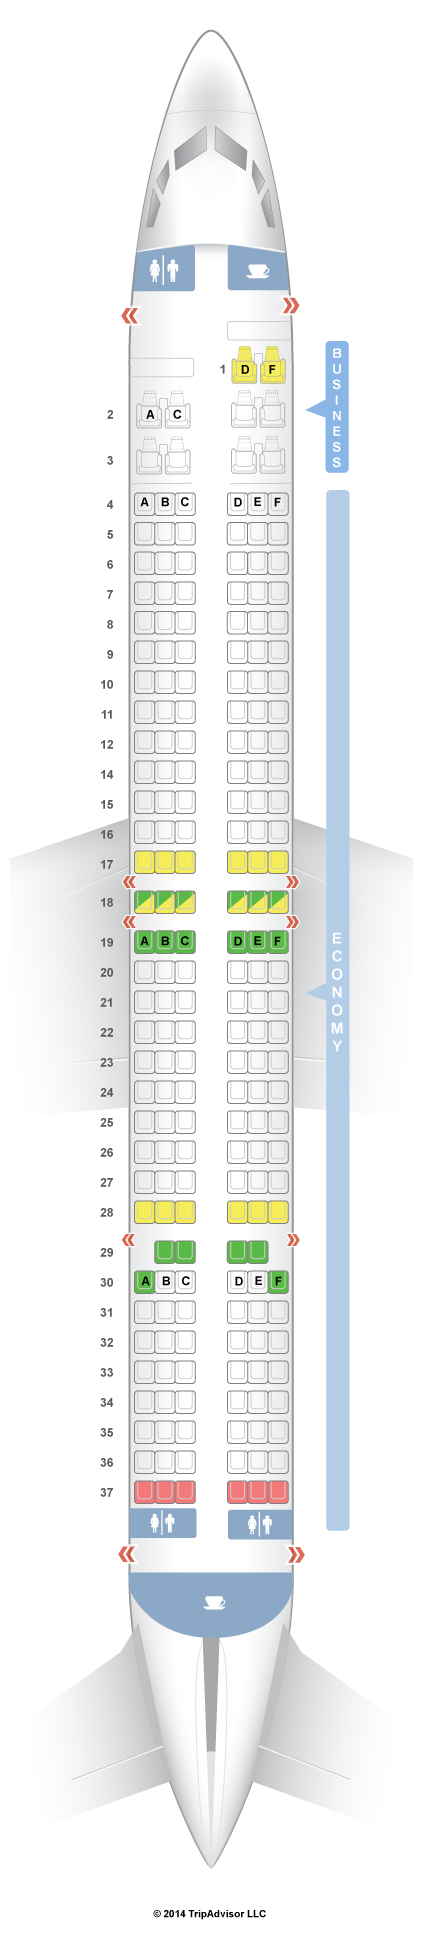 23++ Seating arrangement on 737